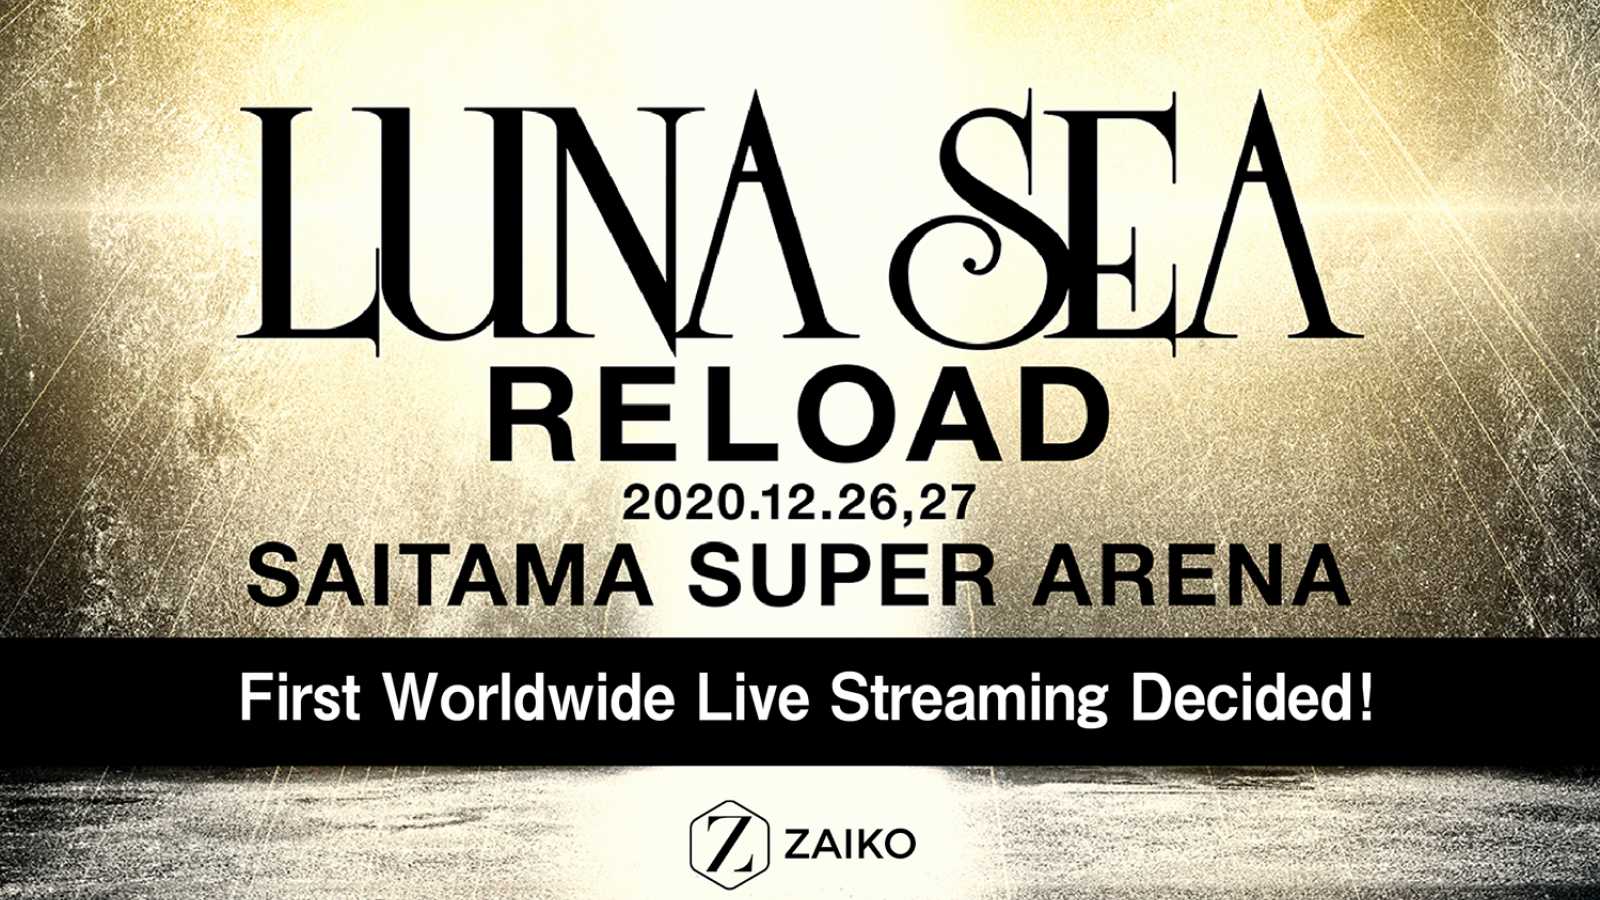 LUNA SEA to Live Stream Saitama Super Arena Shows Worldwide © LUNA SEA. All rights reserved.